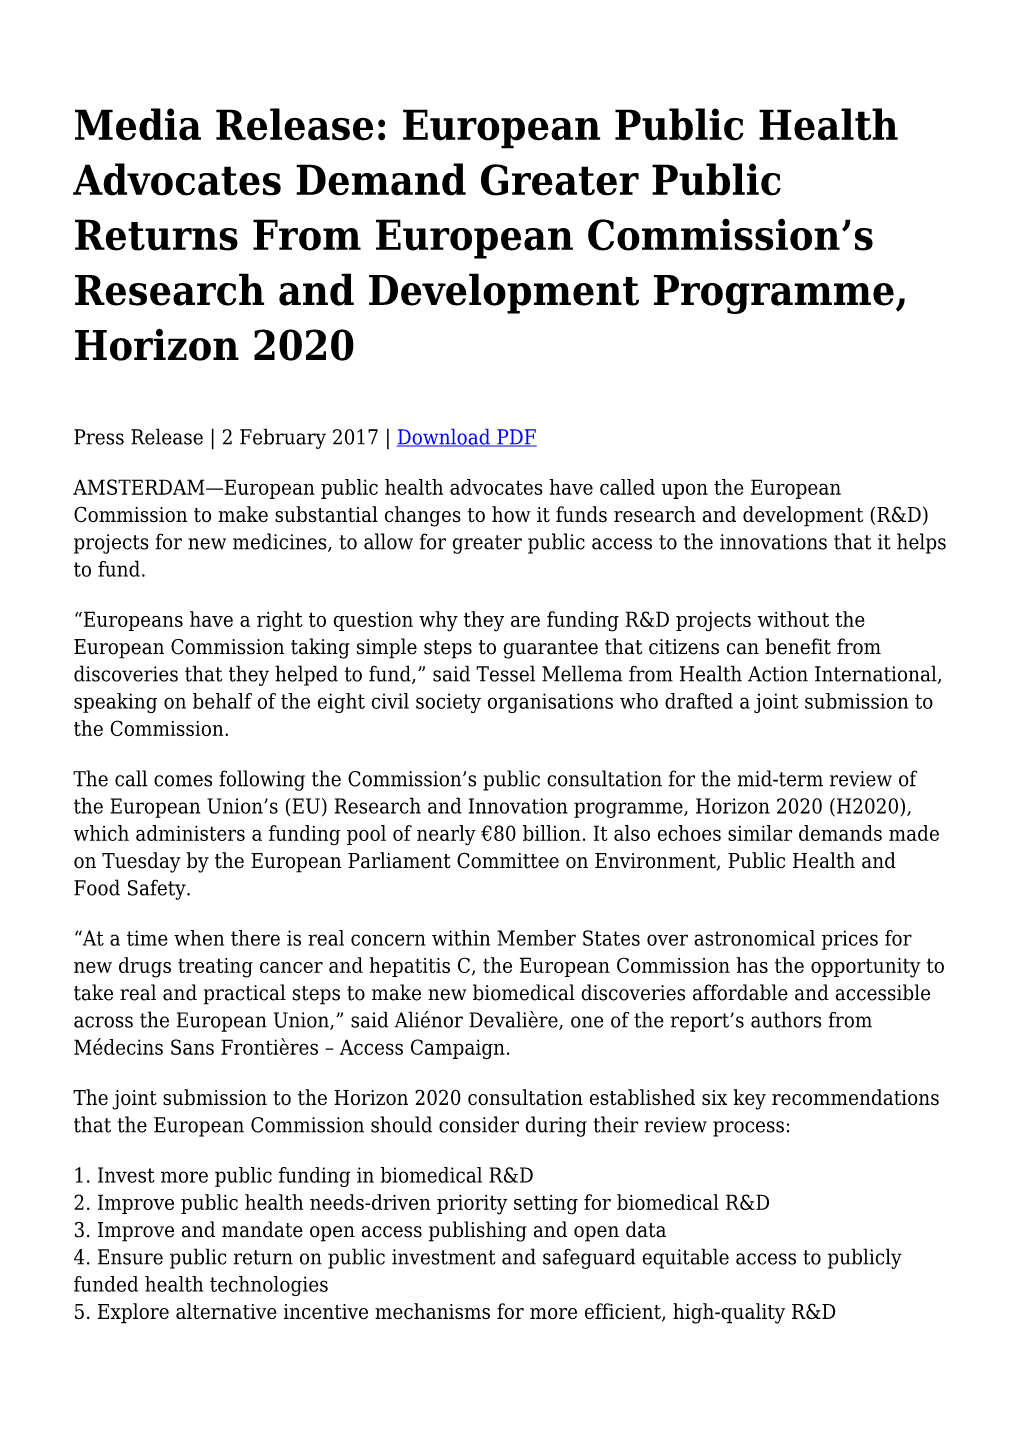 Media Release: European Public Health Advocates Demand Greater Public Returns from European Commission’S Research and Development Programme, Horizon 2020